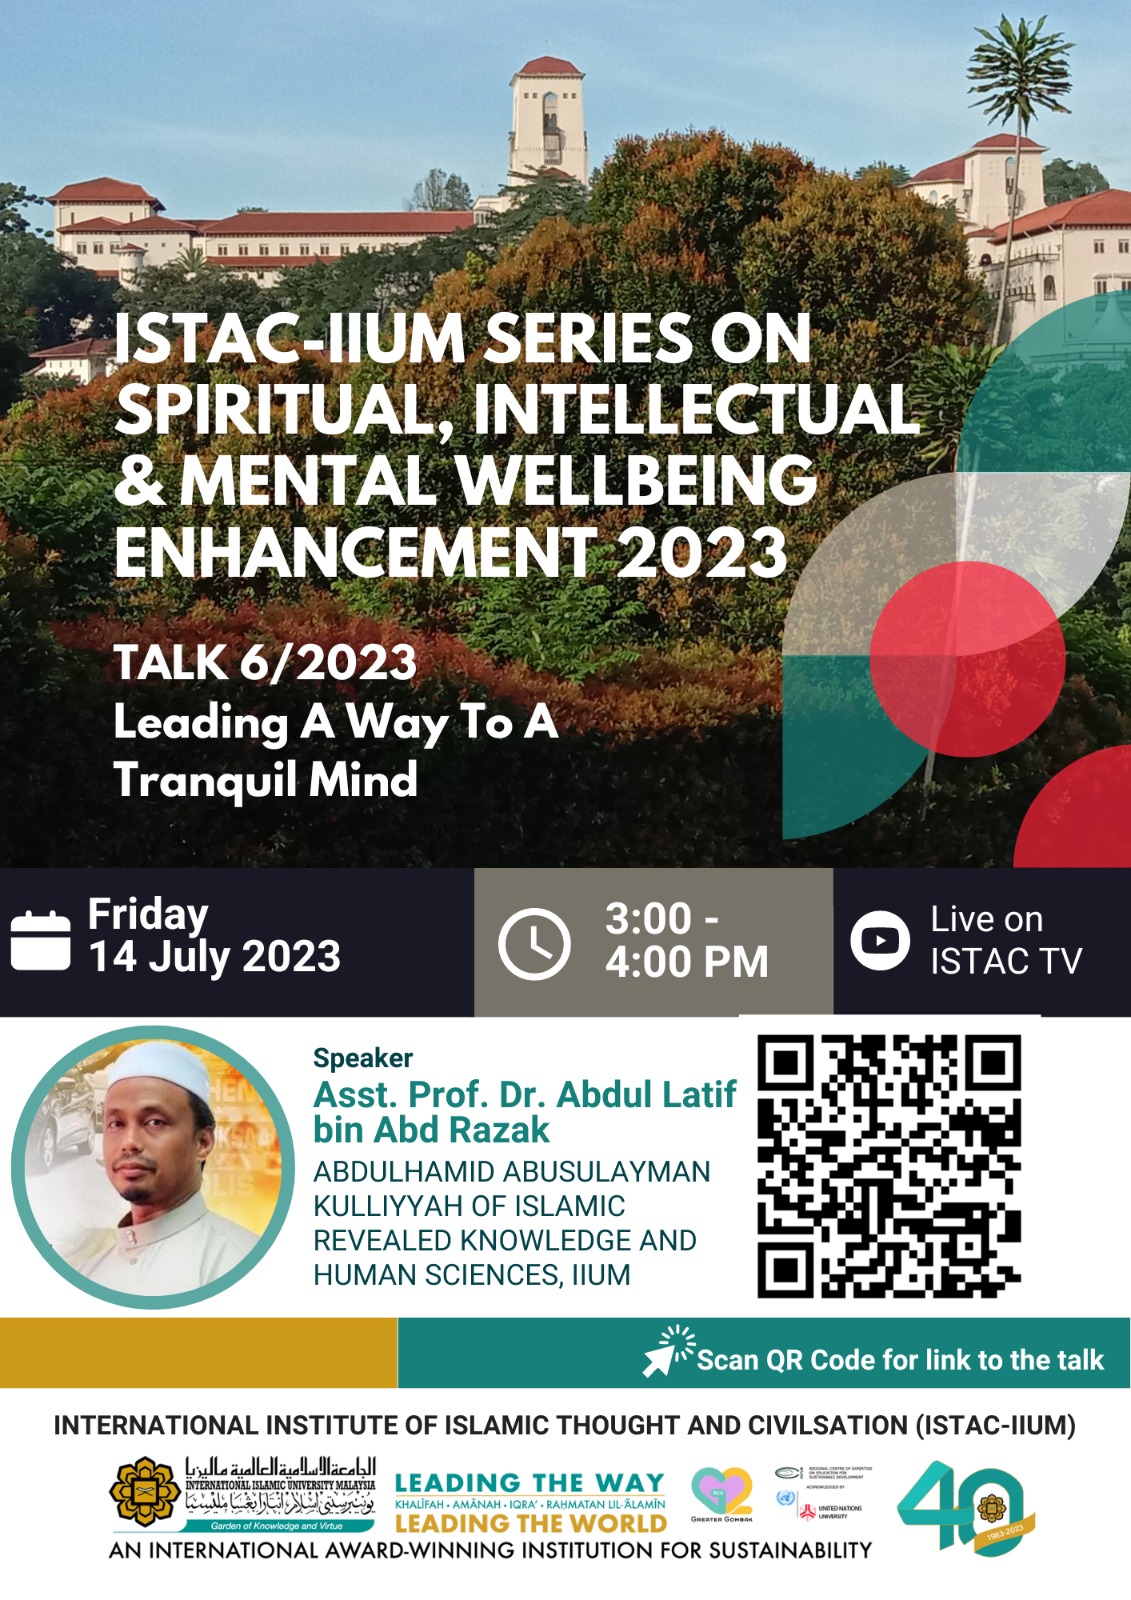 ISTAC-IIUM SERIES ON SPIRITUAL, INTELLECTUAL & MENTAL WELLBEING ENHANCEMENT 2023 - TALK 6/2023